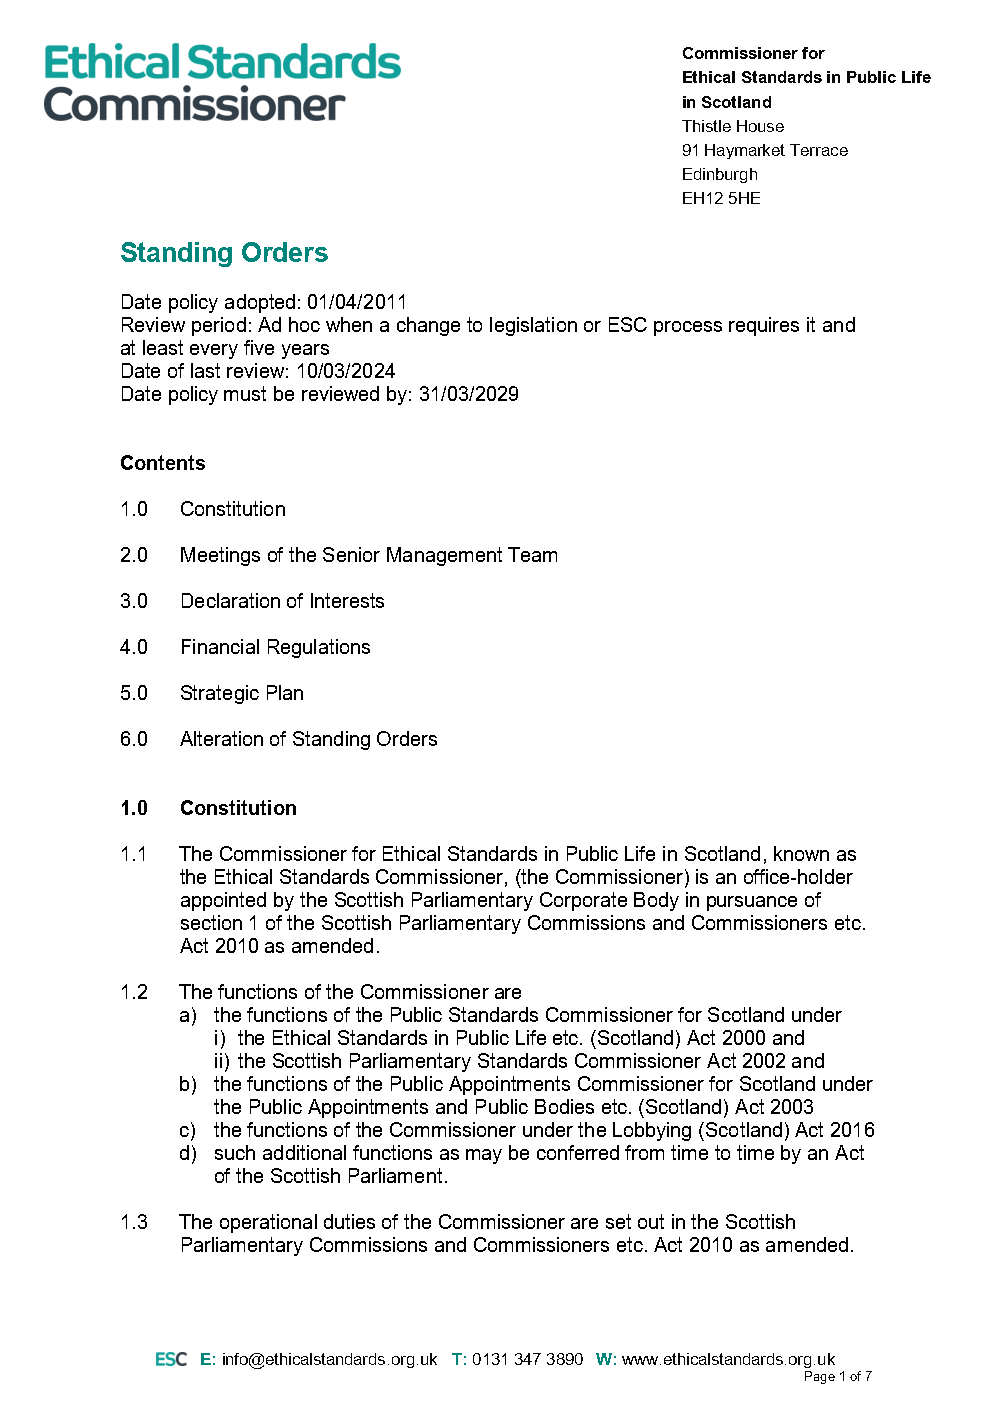 ESC Standing Orders